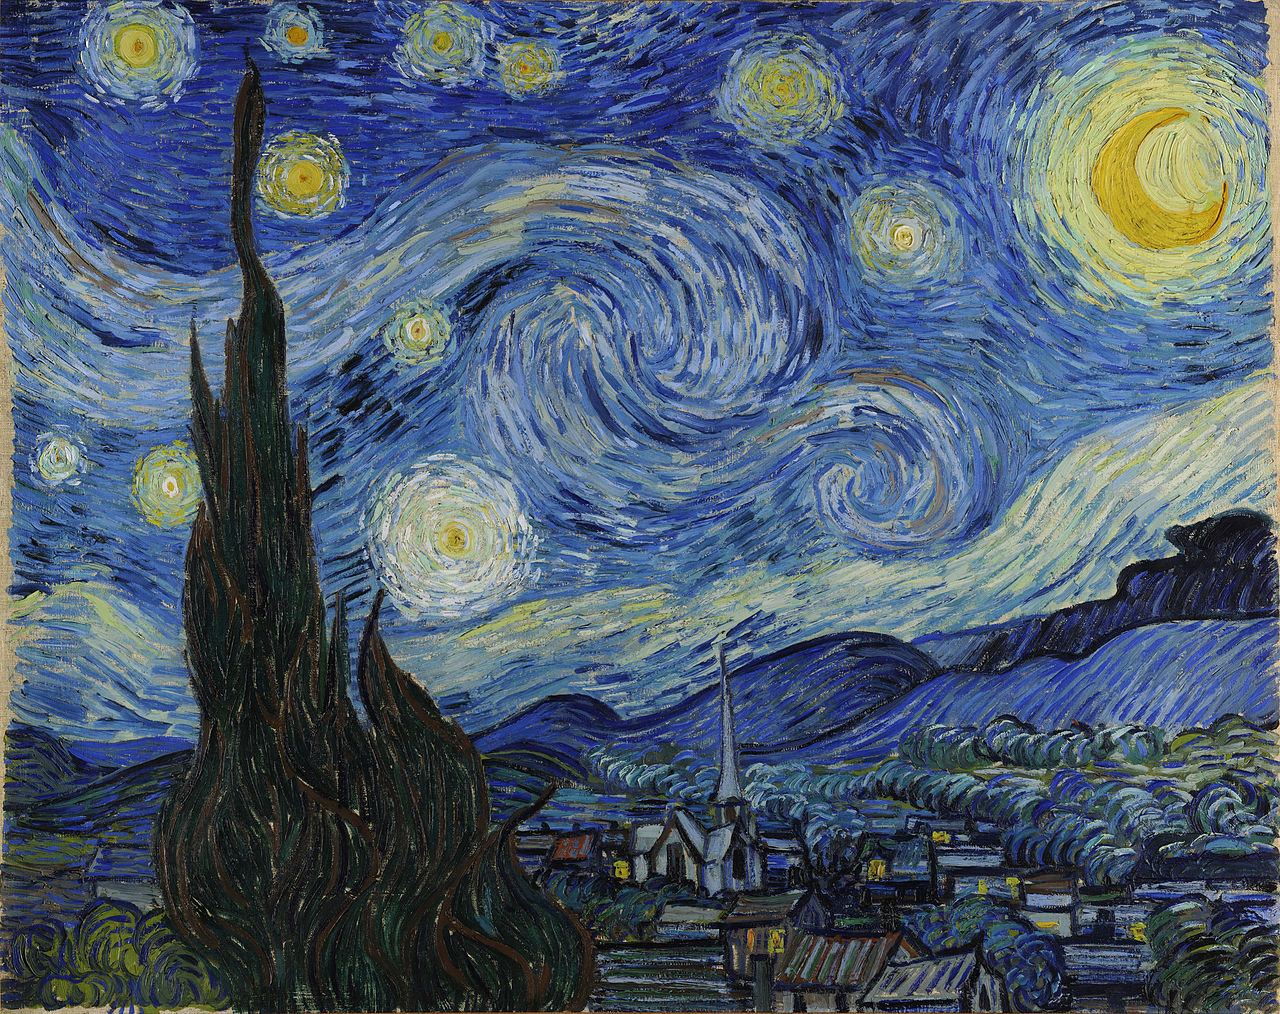 Noche Estrellada by Vincent van Gogh - 1889 Museum of Modern Art